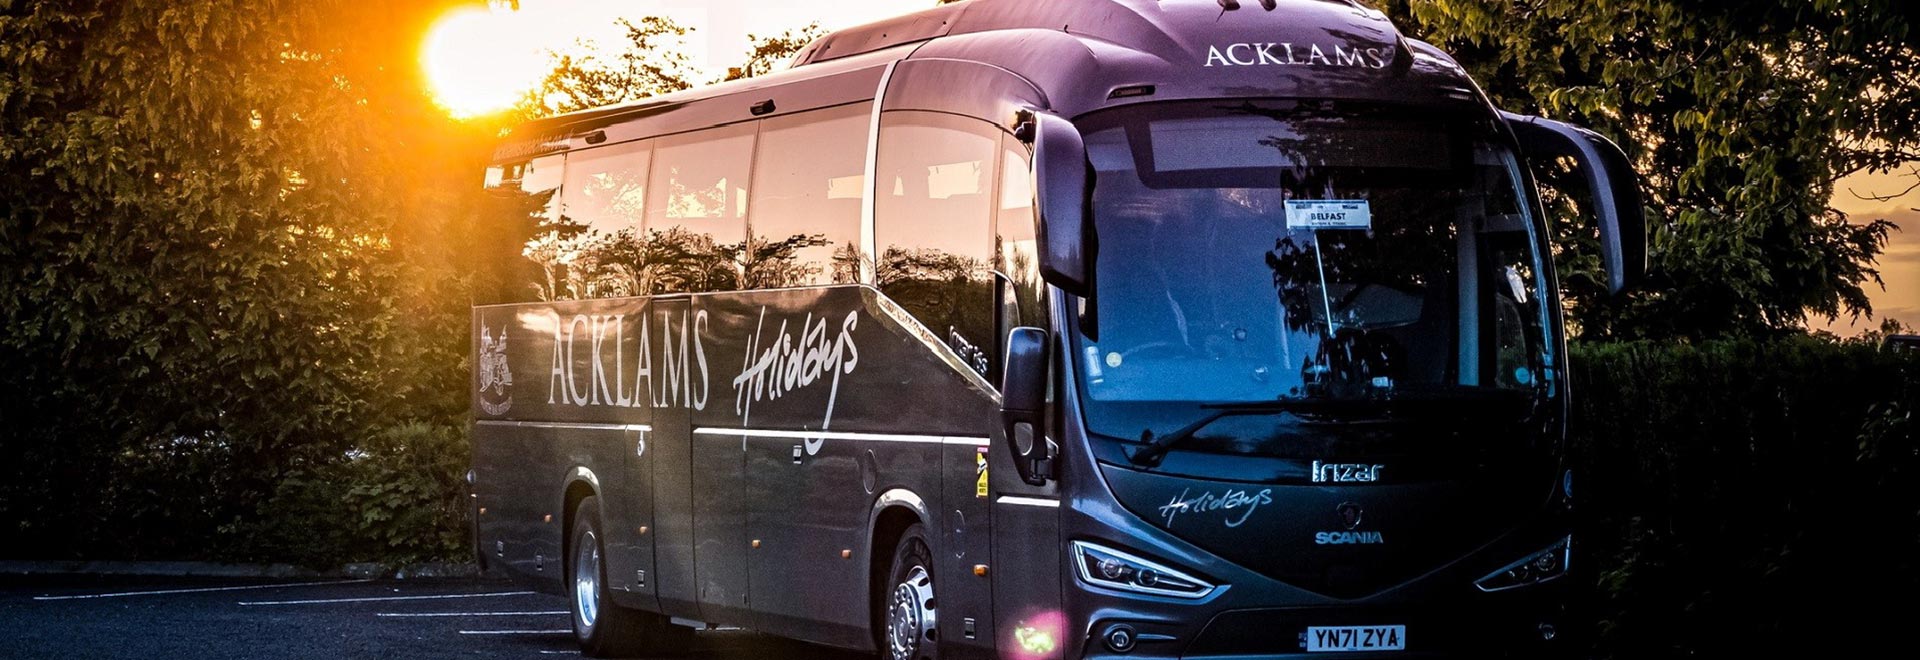 althams travel coach trips